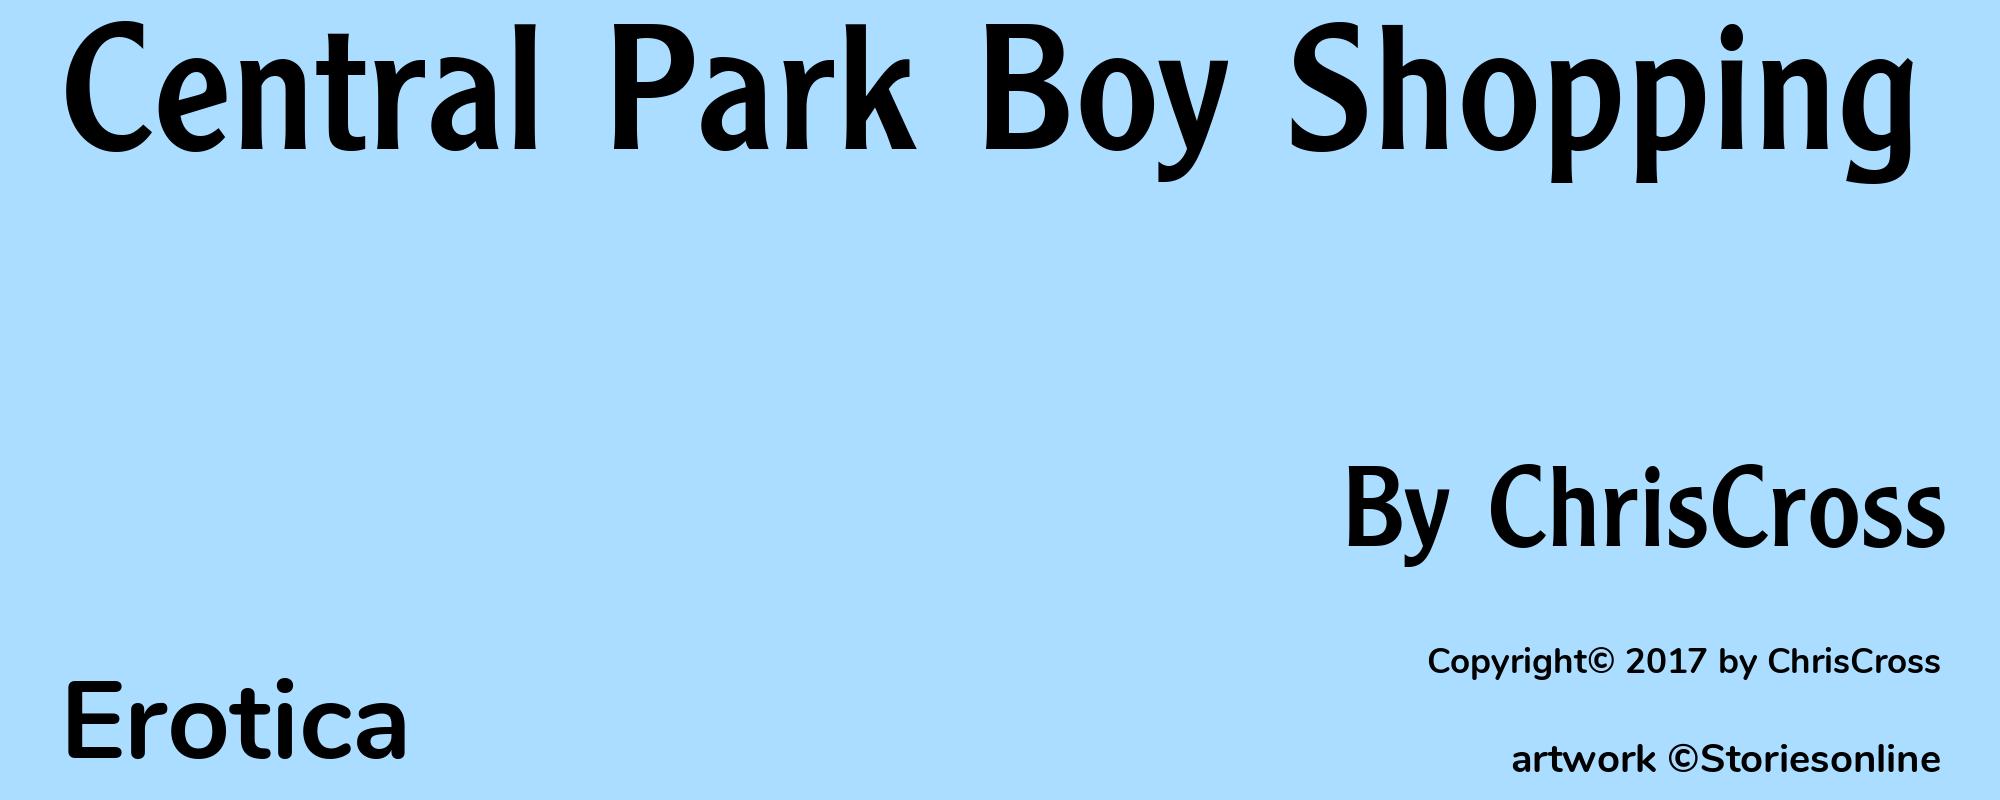 Central Park Boy Shopping - Cover